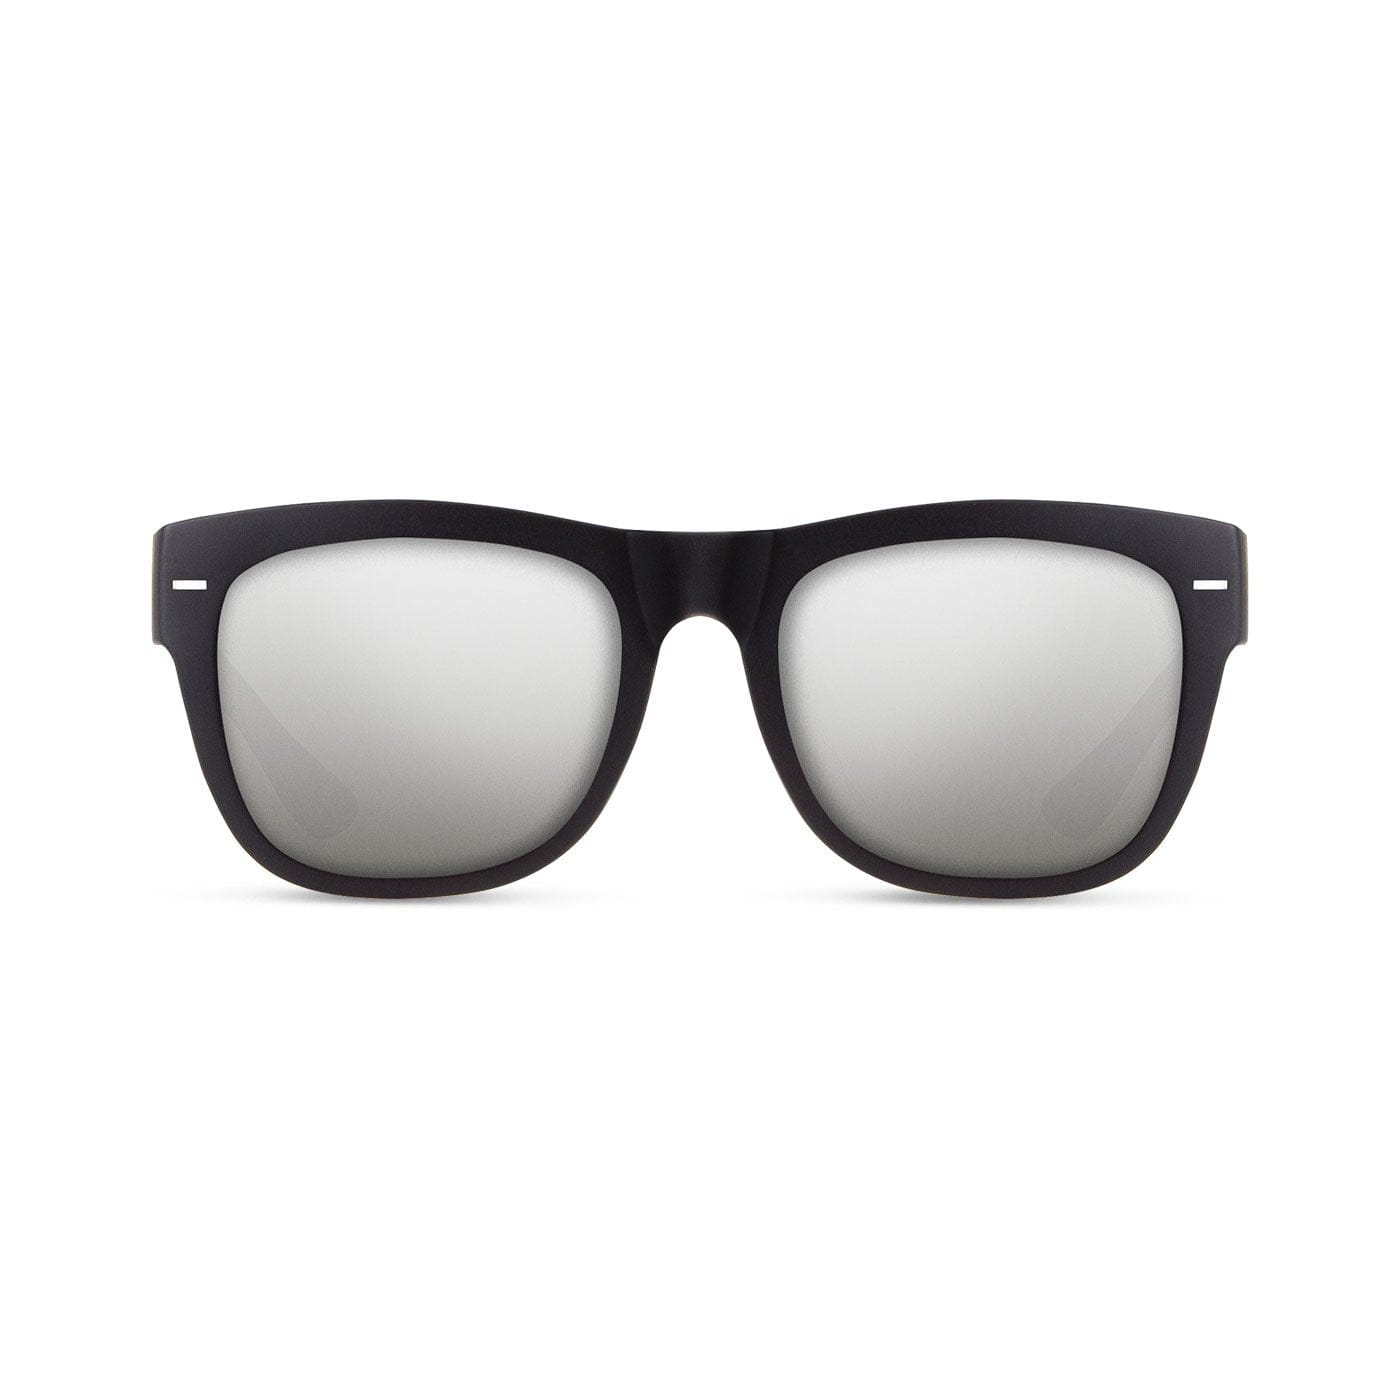 Makai Shinny Black / Mirror Sunglasses